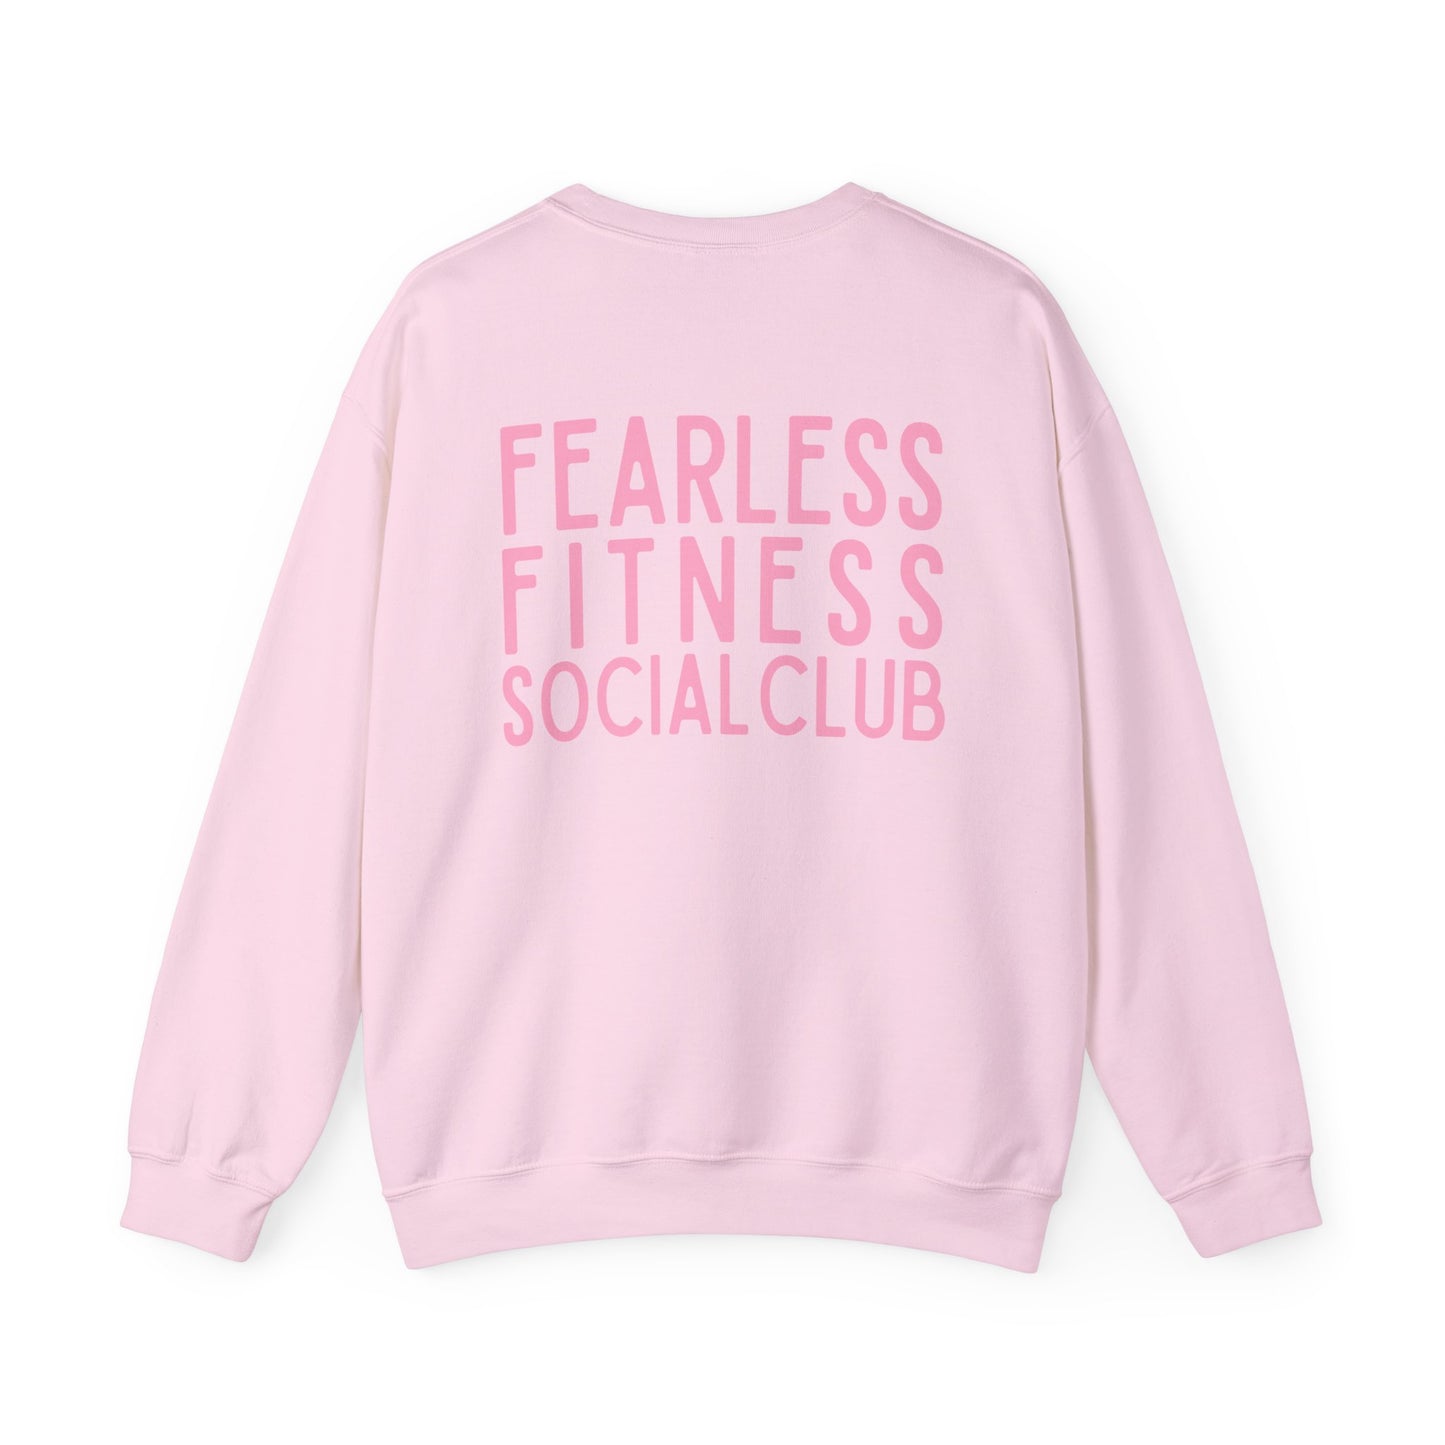 Fearless Fitness Social Club - Crewneck Sweatshirt Pullover